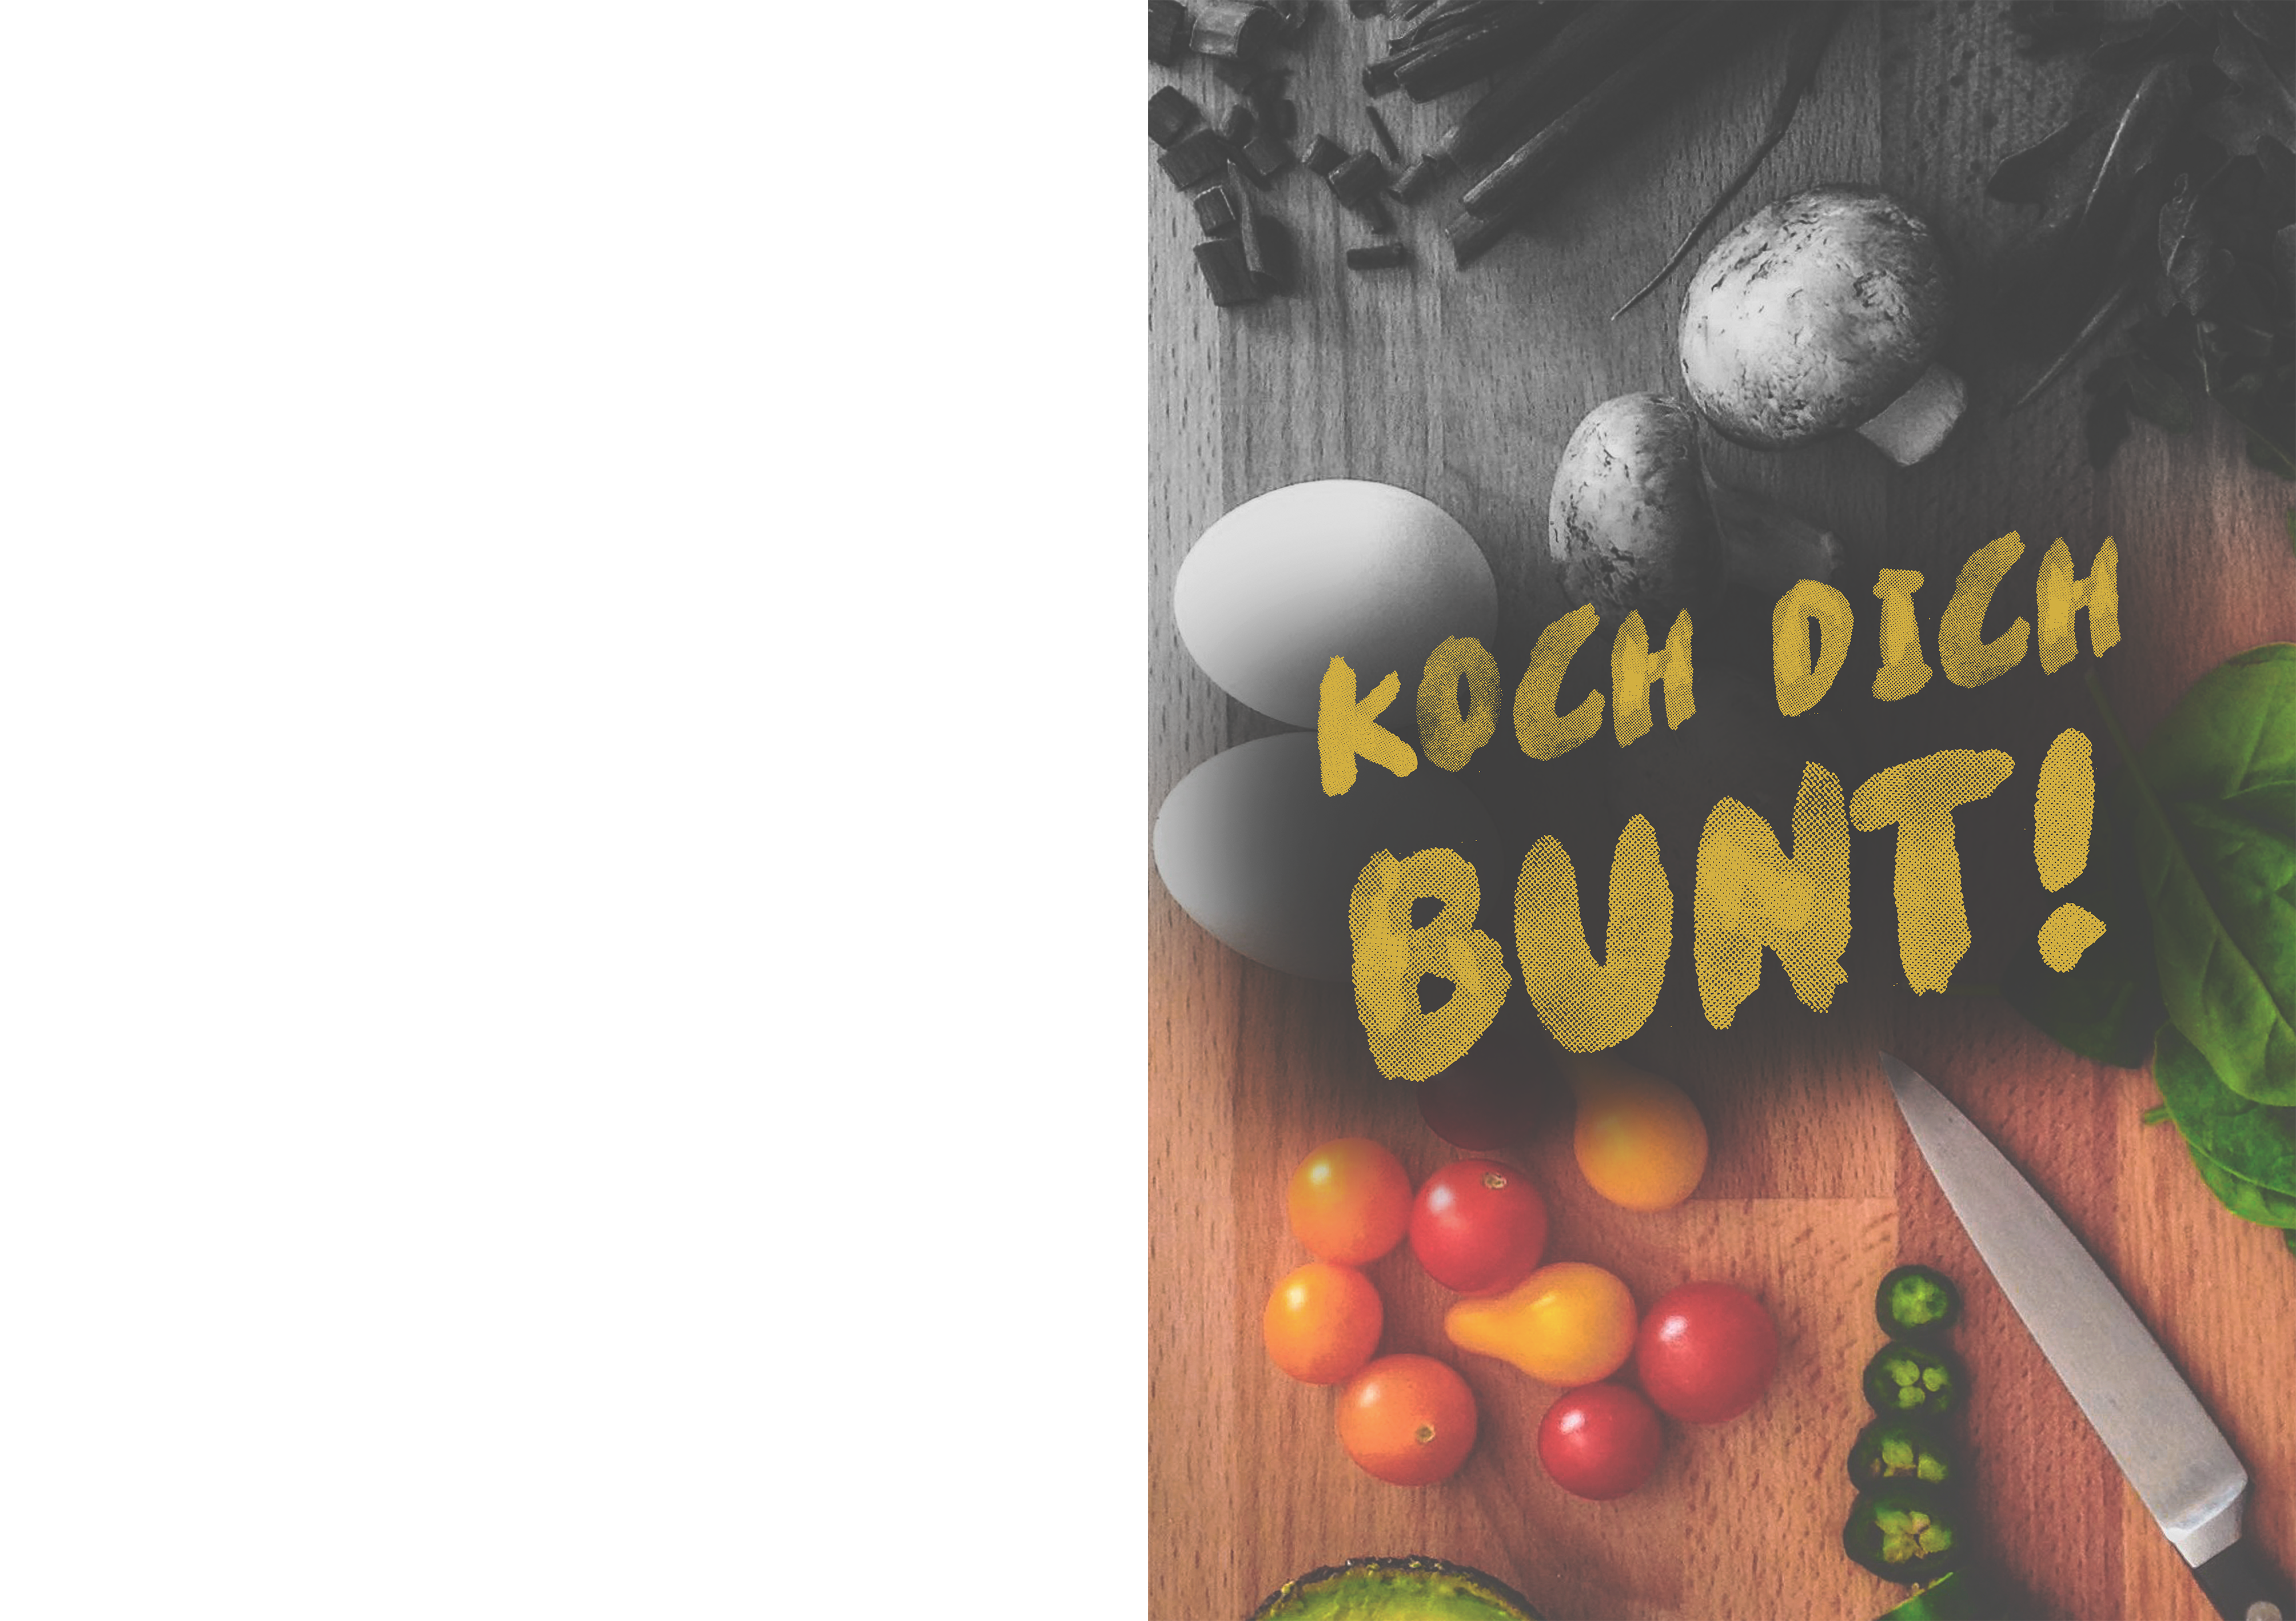 Kochbuch_cover